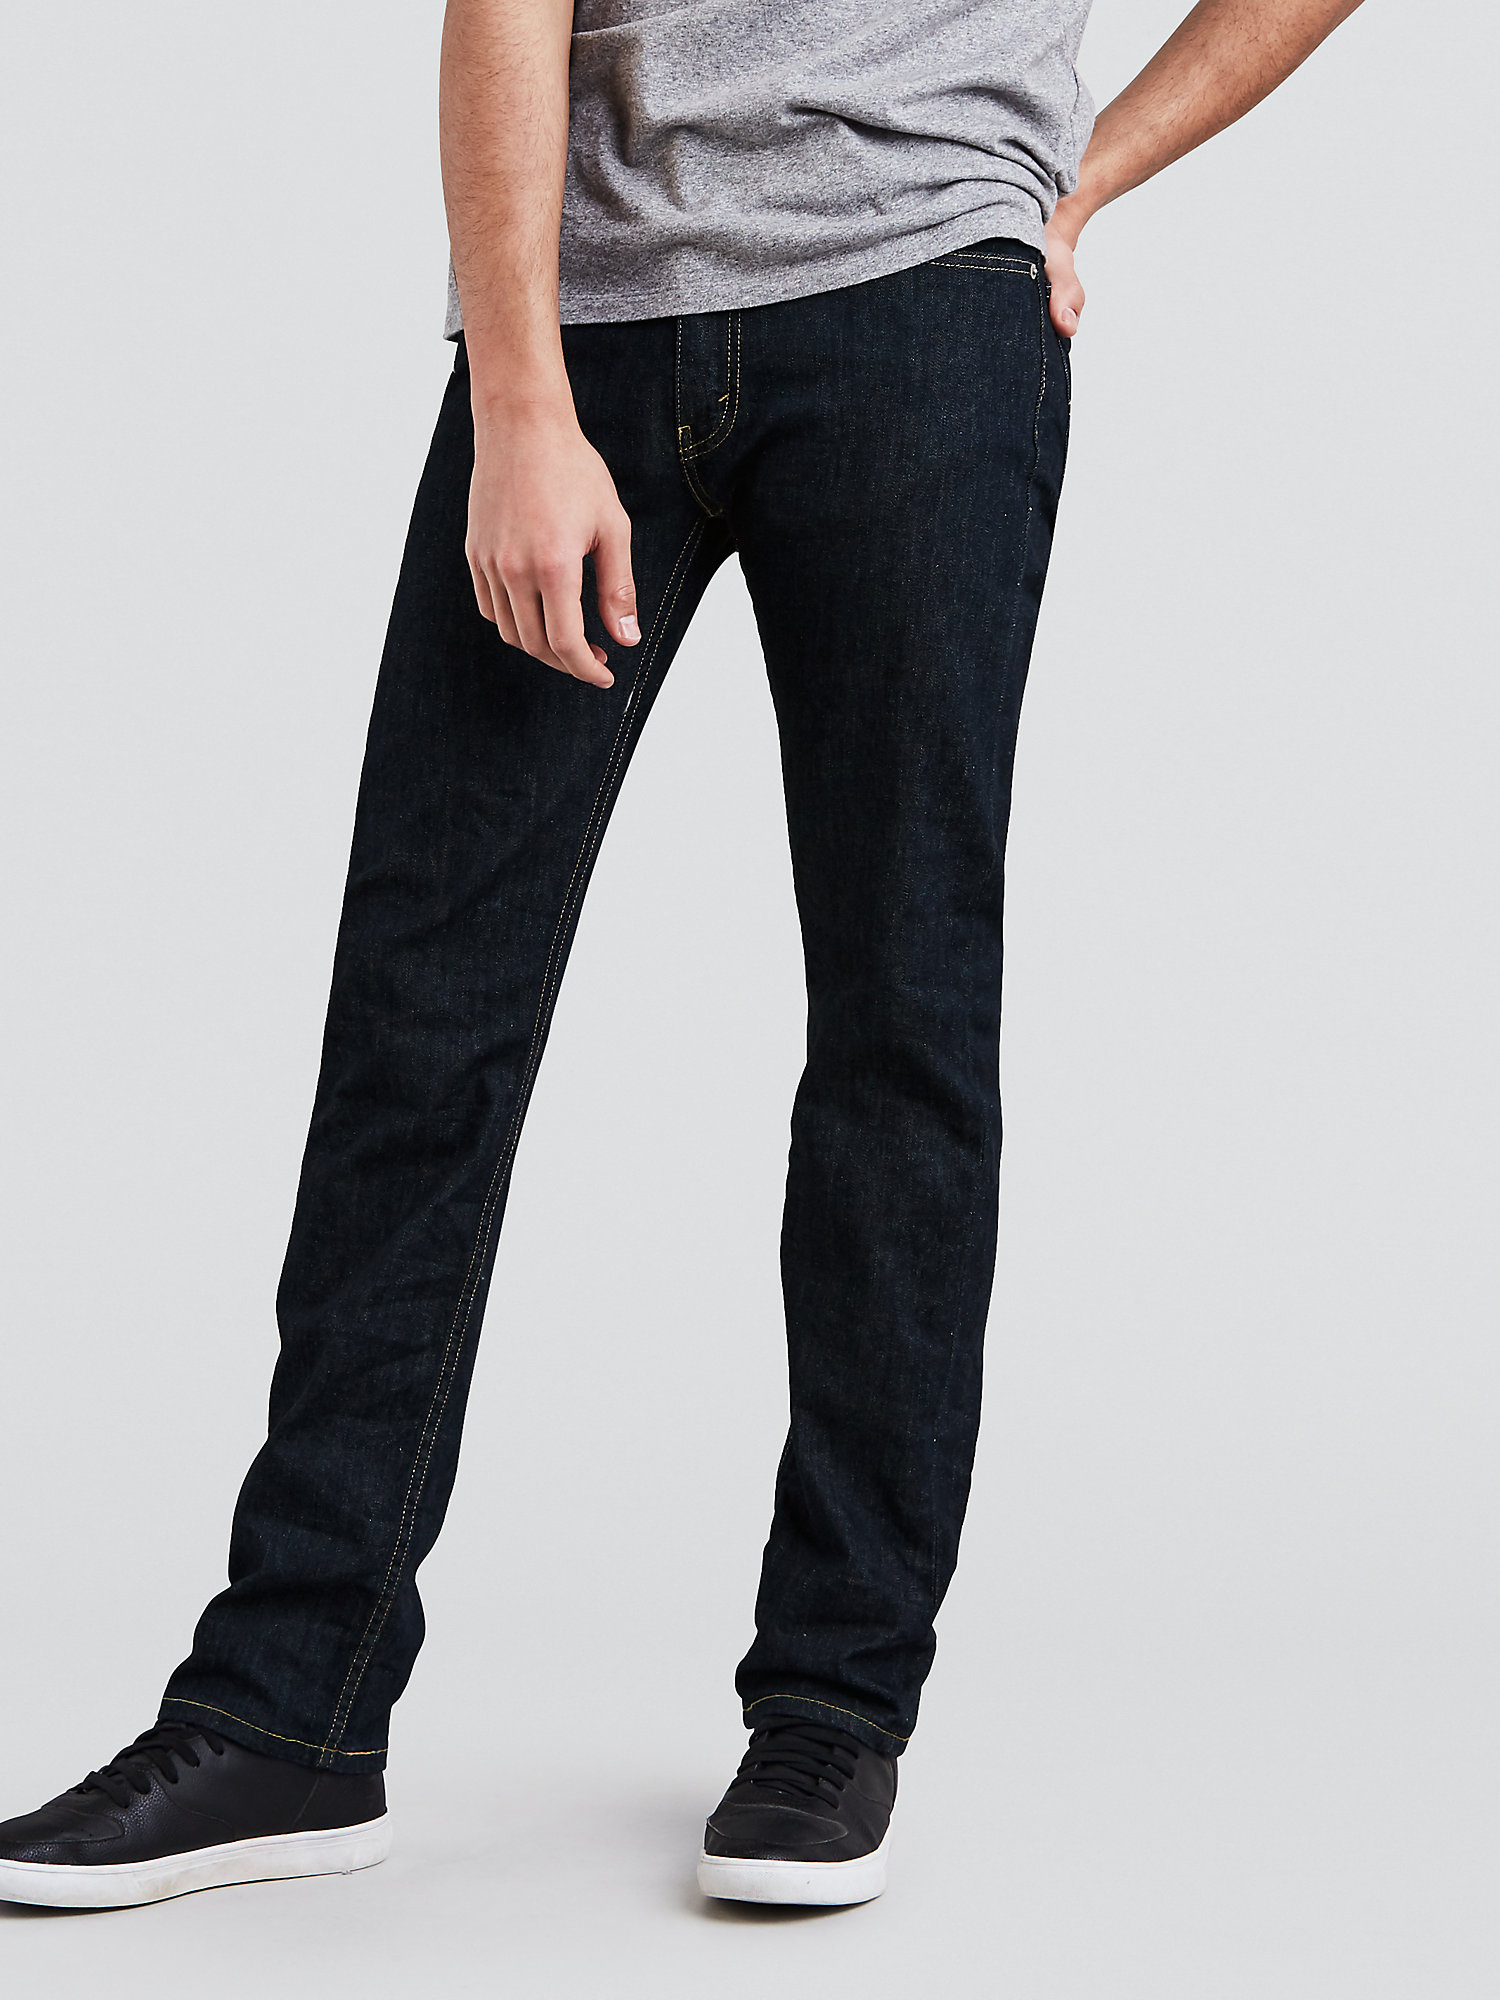 Levi's Men's 513 Slim Straight Fit Jeans - image 1 of 7